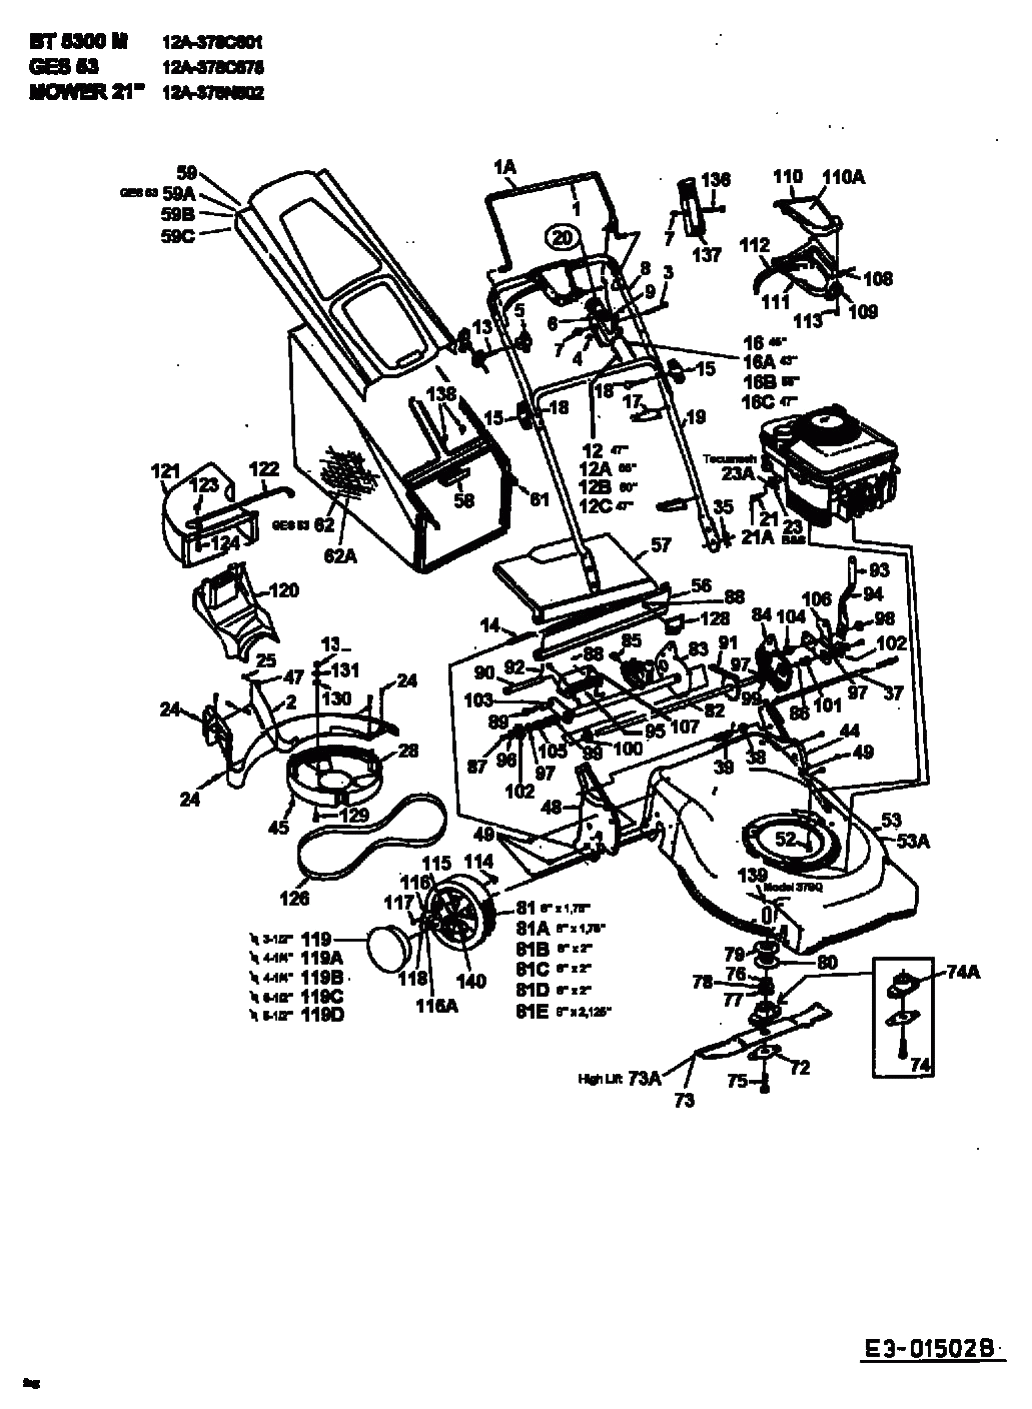 MTD Артикул 12A-378C678 (год выпуска 1999). Основная деталировка